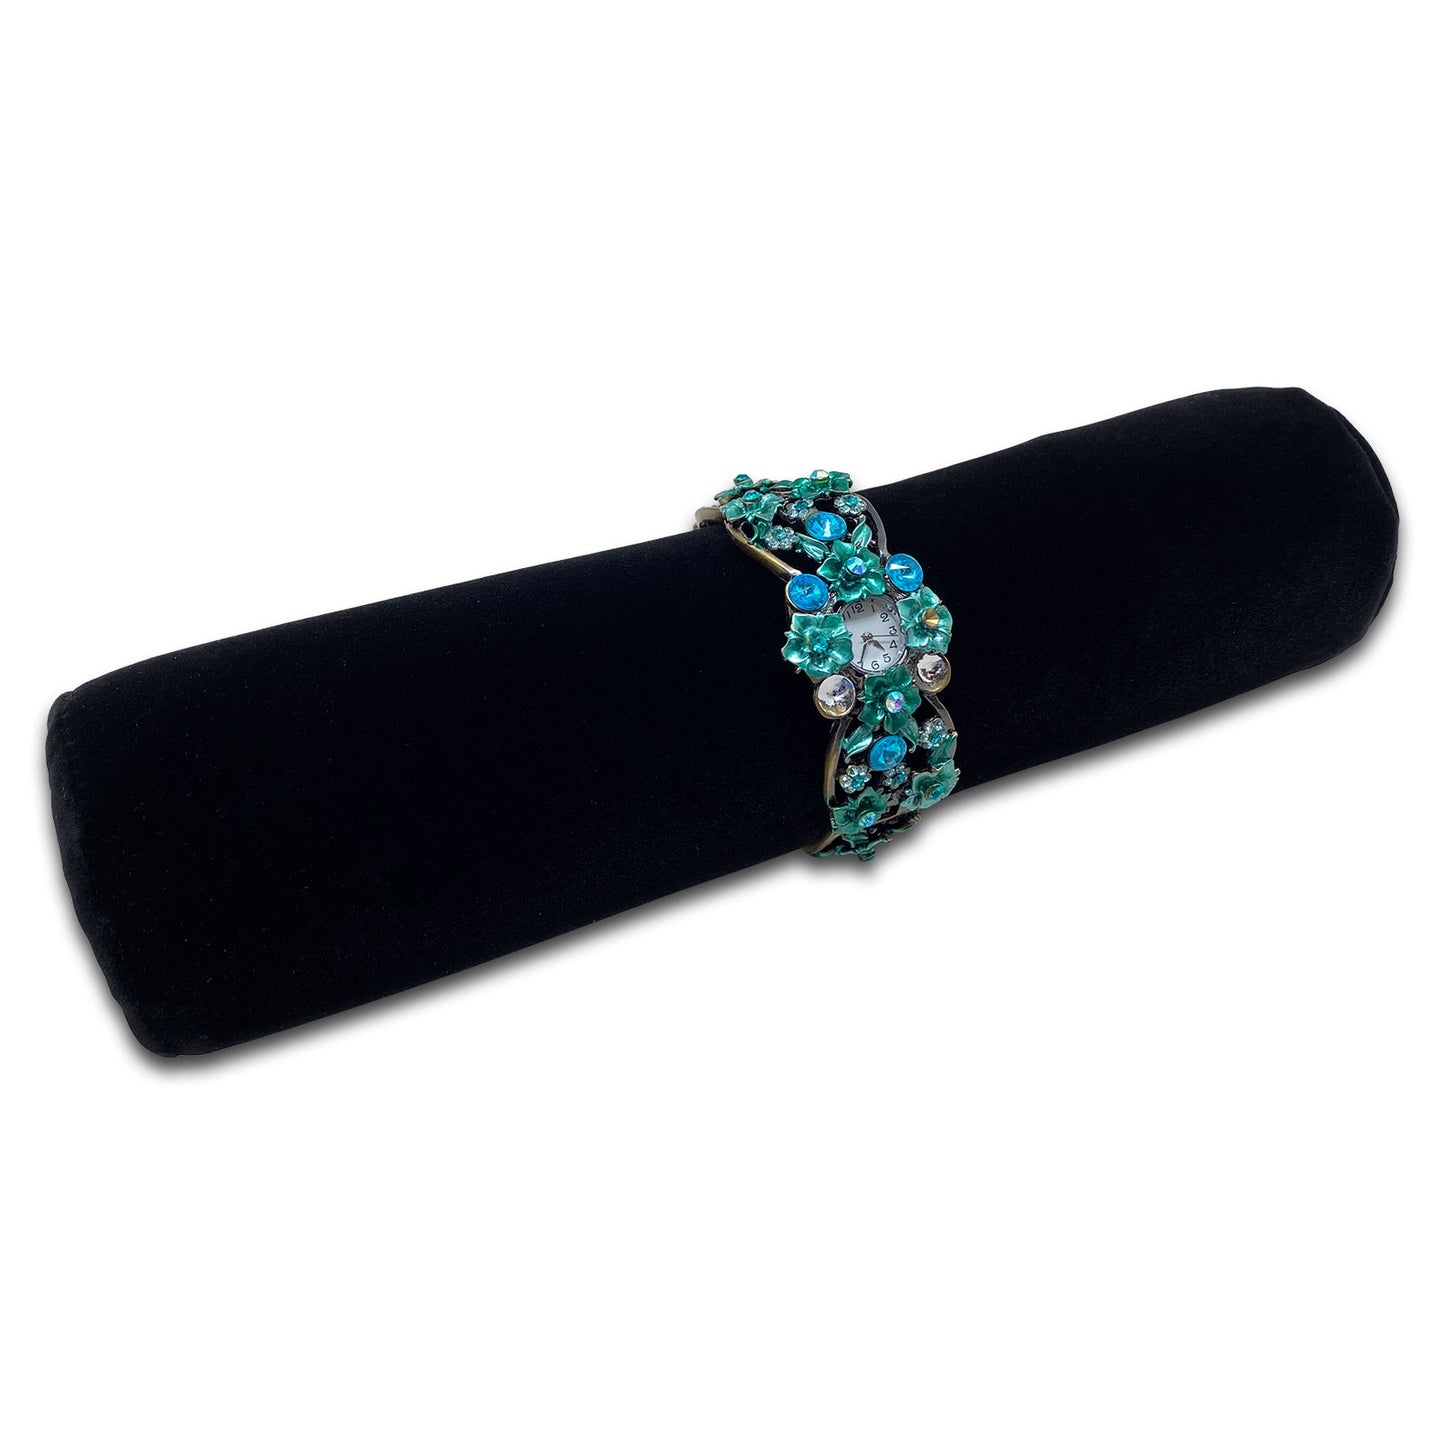 12" Black Velvet Bracelet Watch Jewelry Display Soft Roll